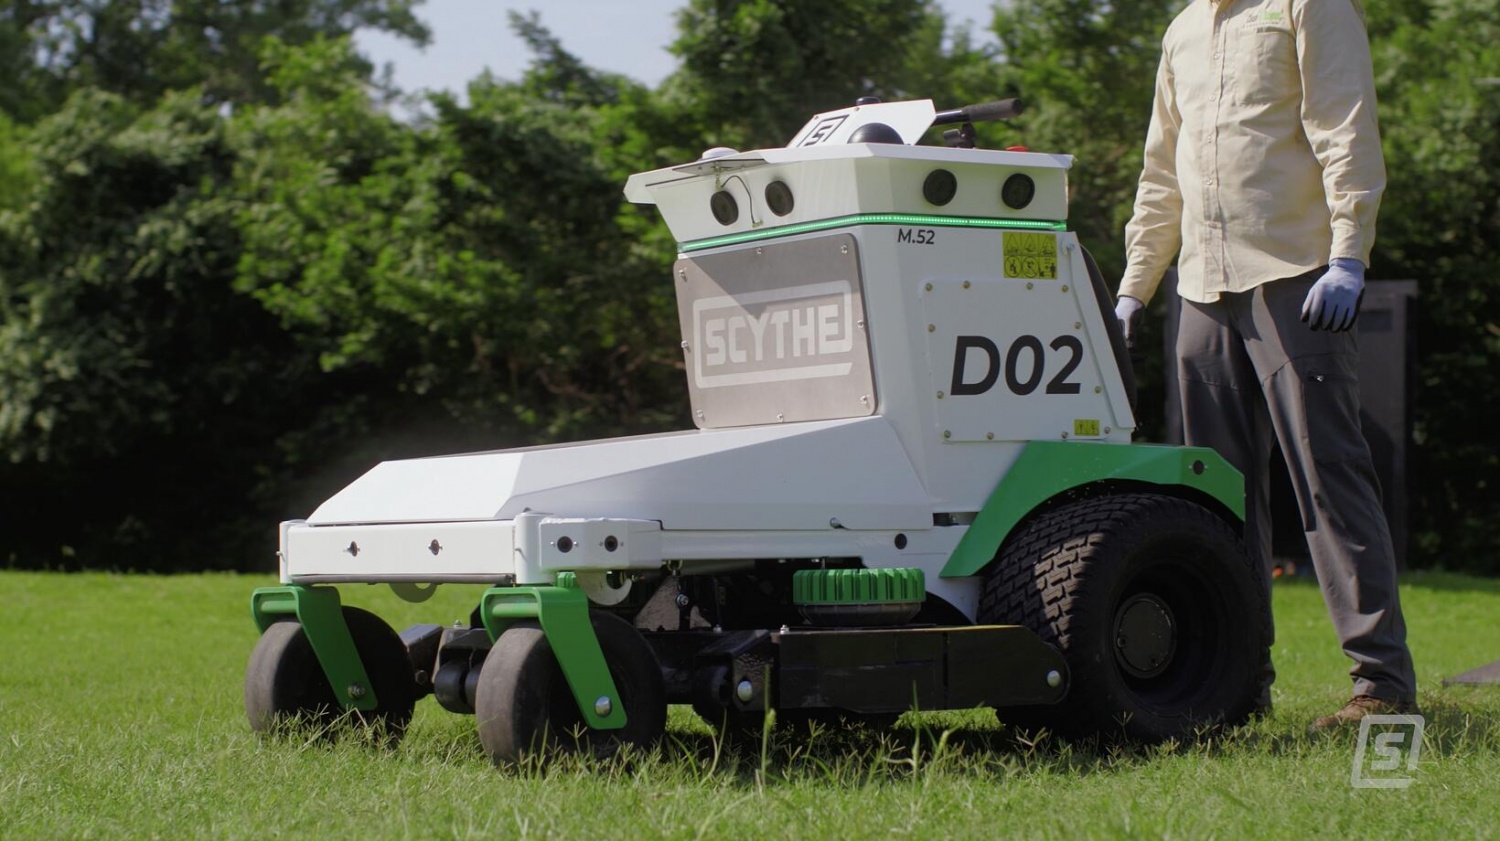 Robot Mower Company Scythe Raises $42 Million in Series B Funding Round